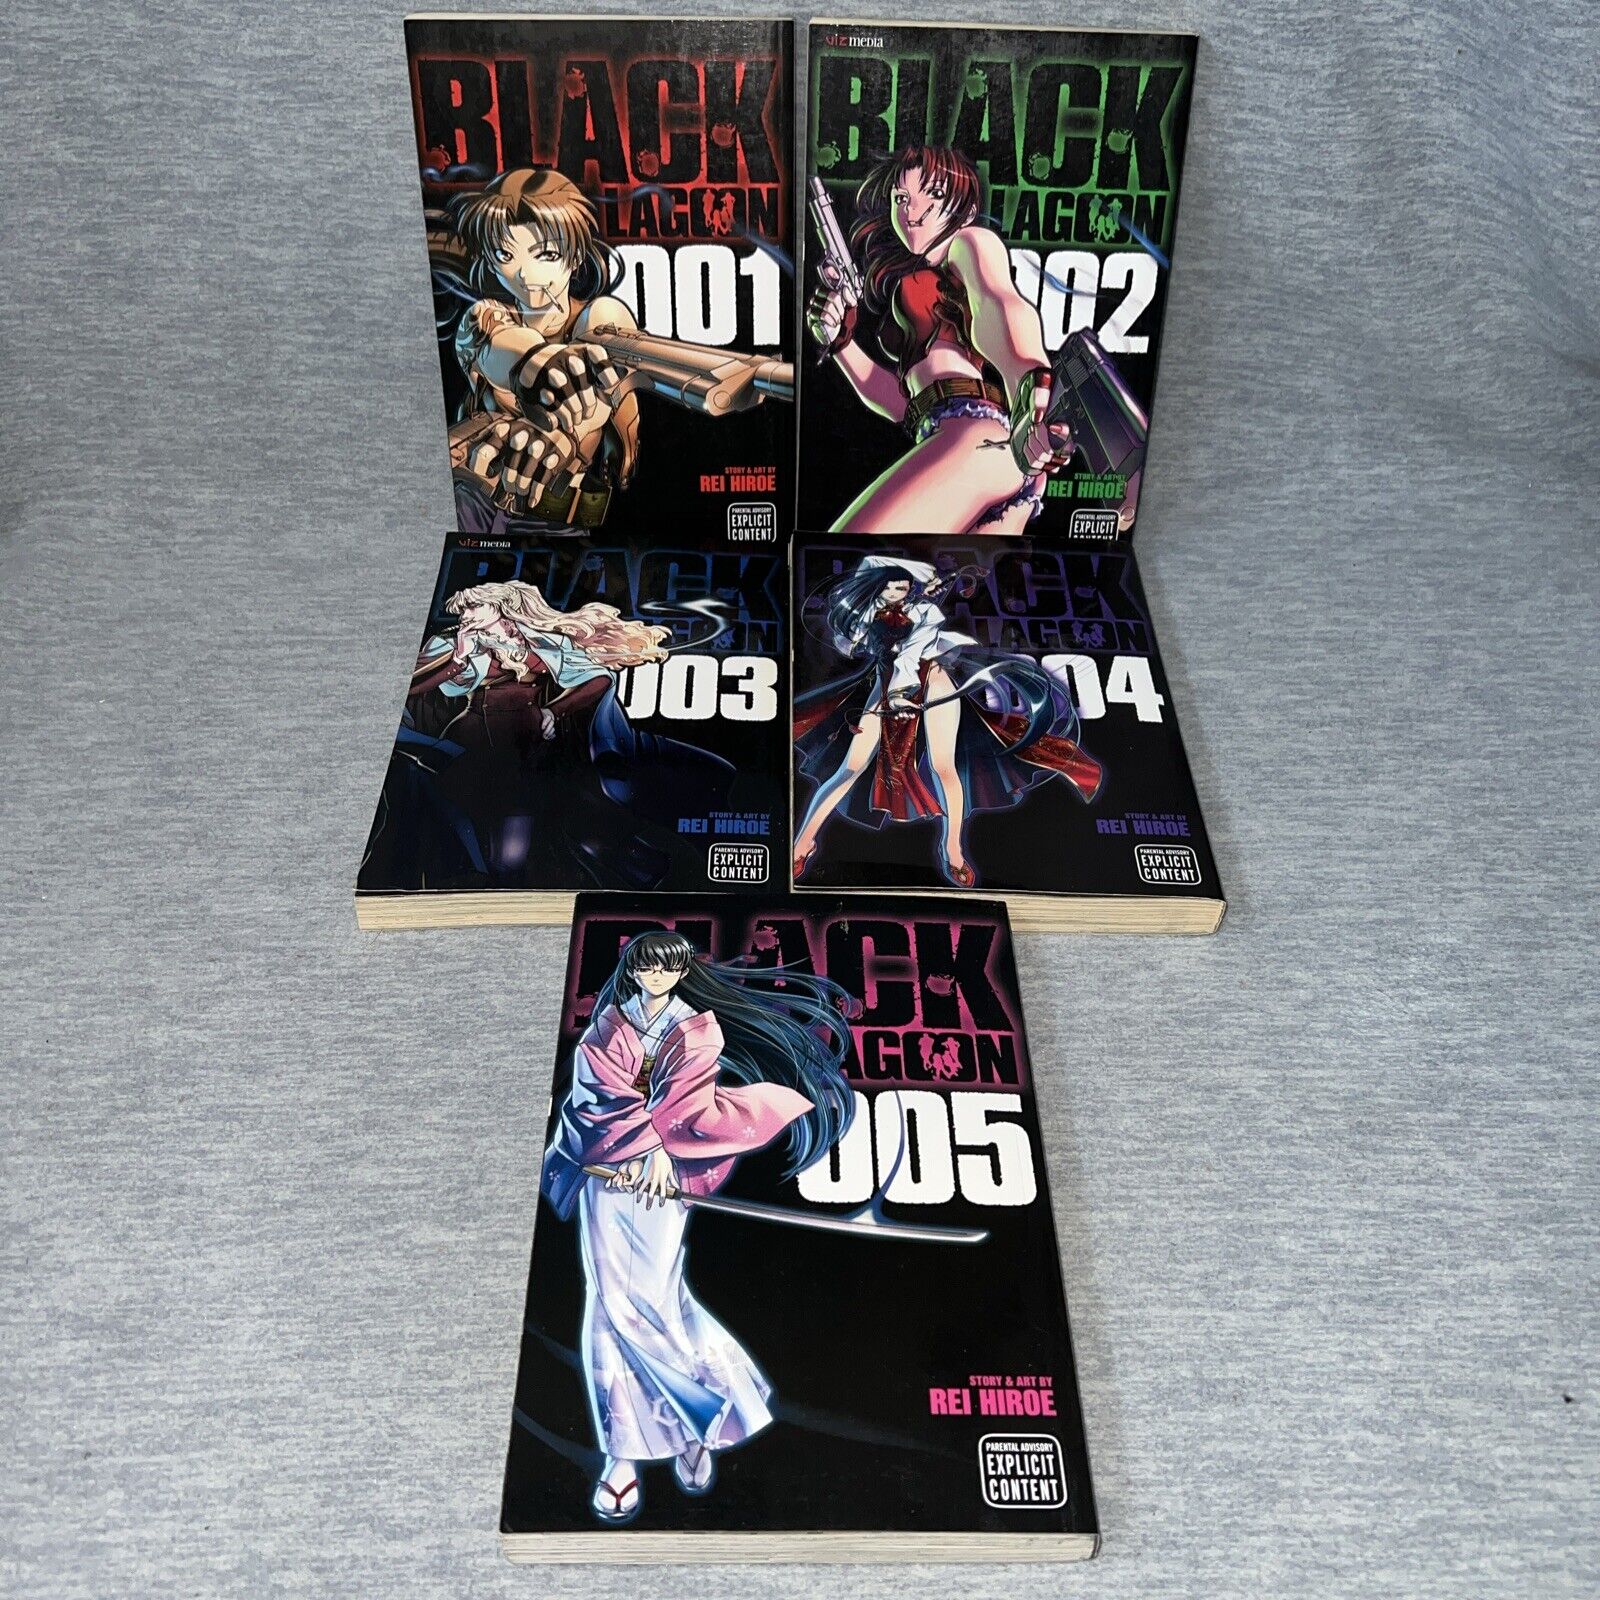 Black Lagoon Manga - Volumes 1-5 by Rei Hiroe - English